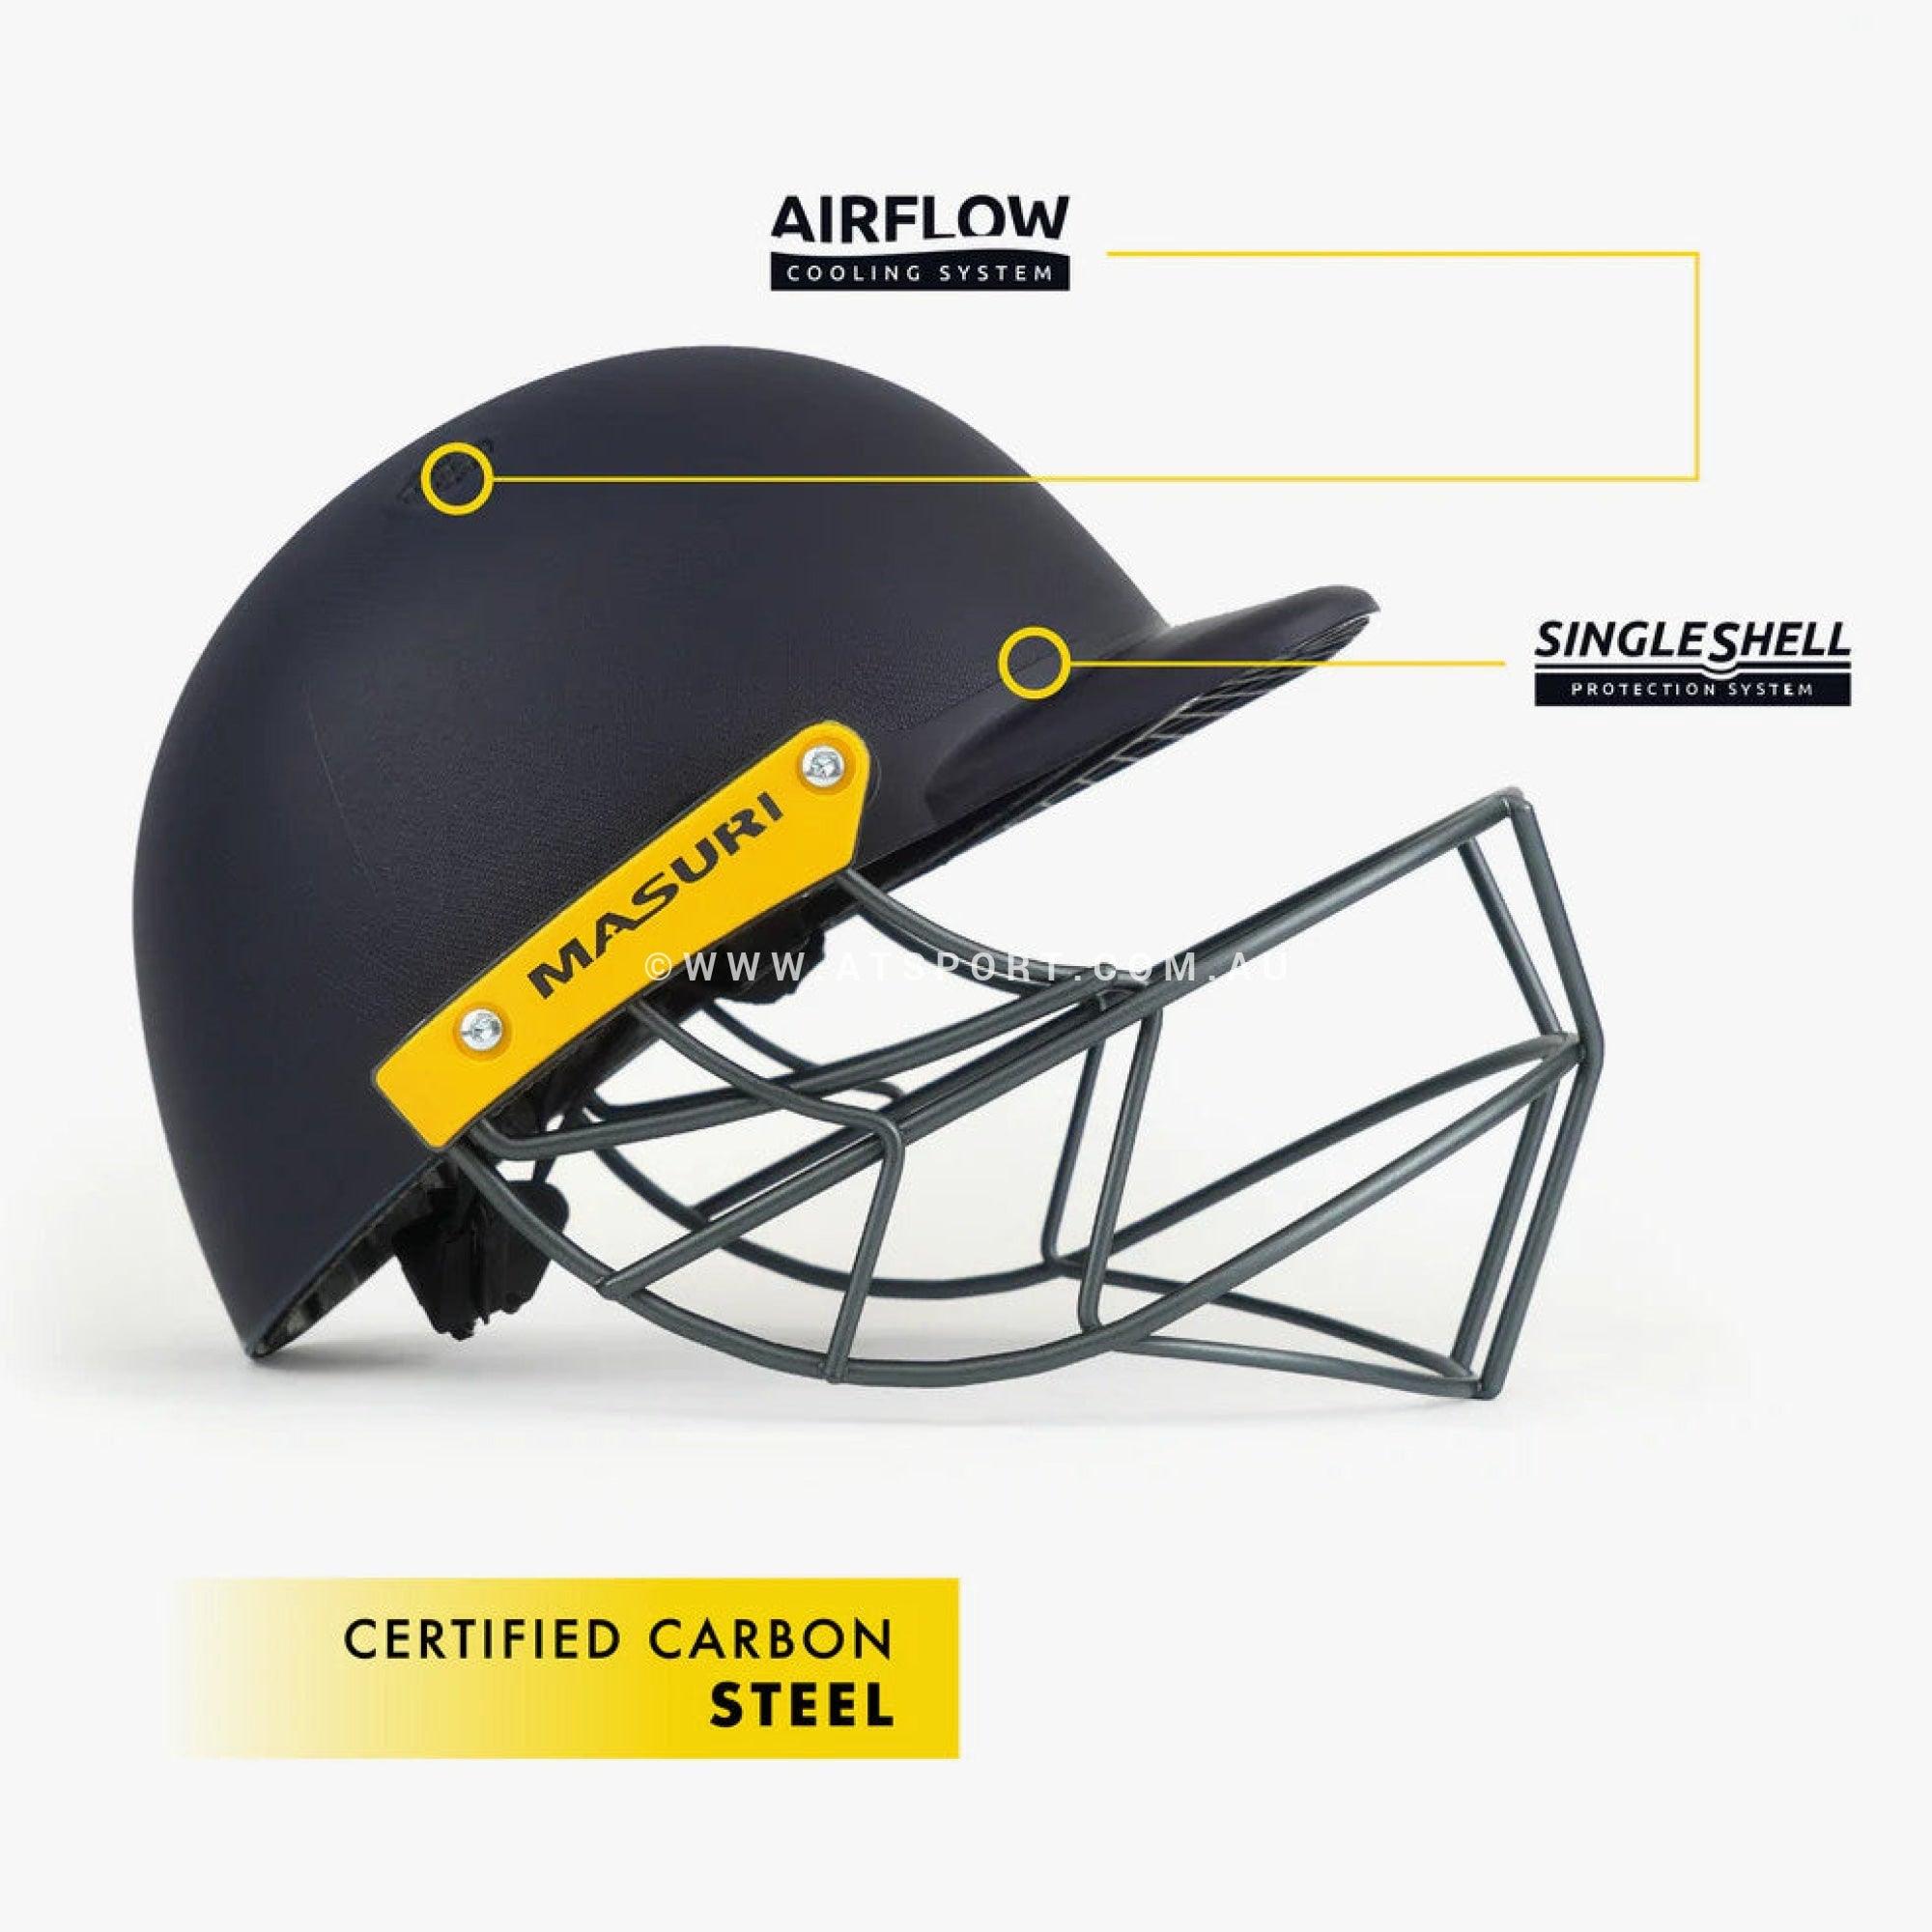 Masuri C LINE STEEL Grille Cricket Helmet - AT Sports